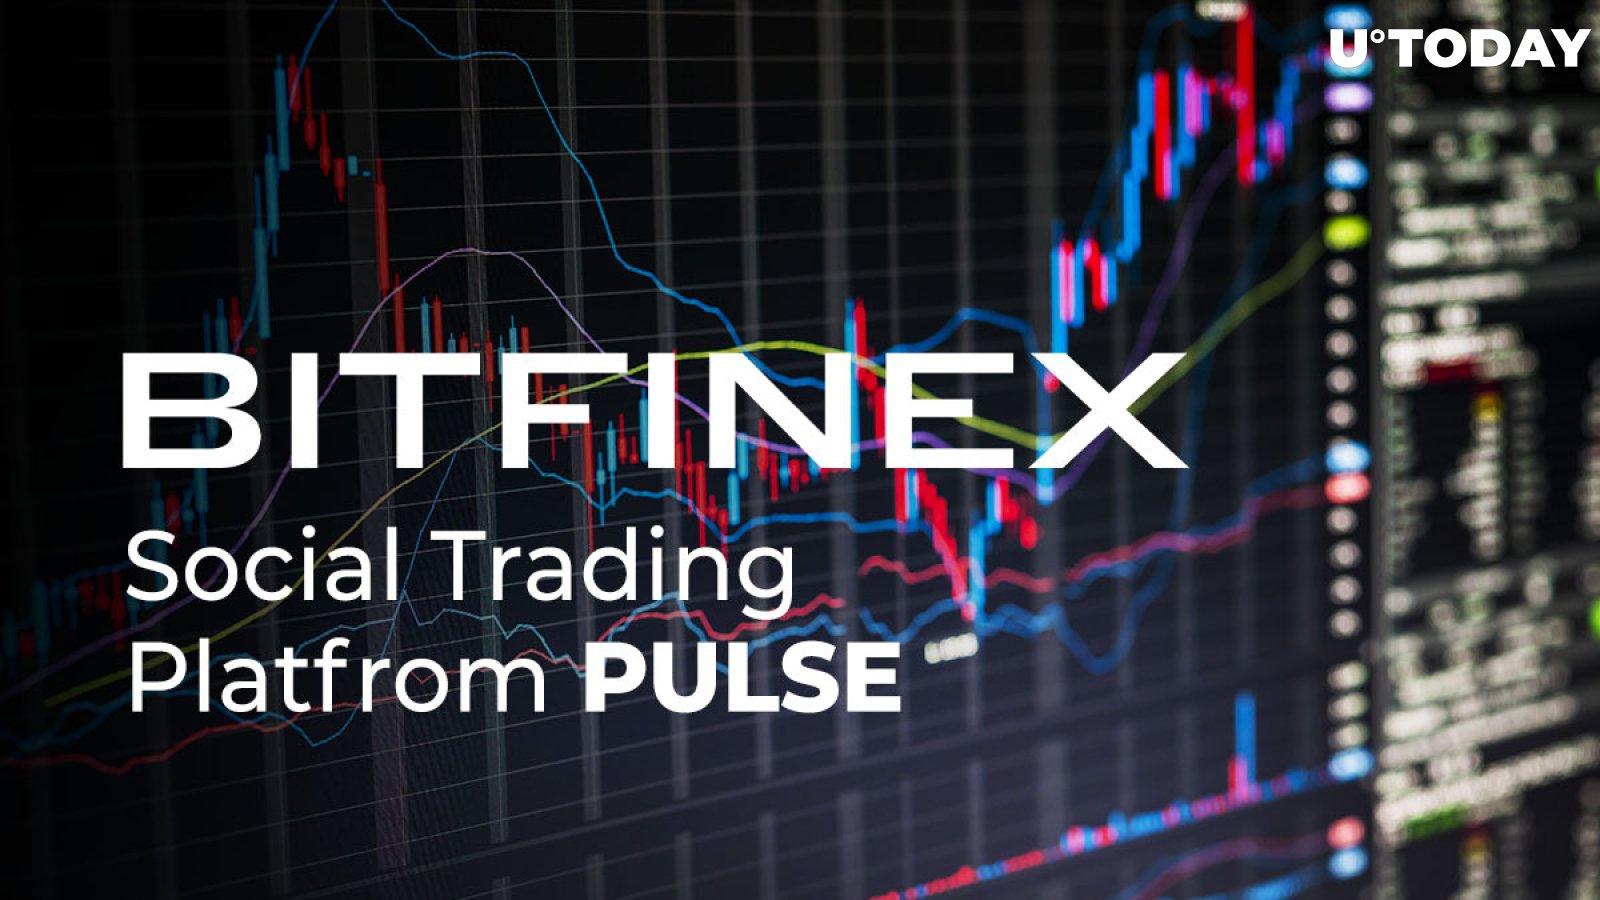 Bitfinex Launches Social Trading Platform Pulse: Details